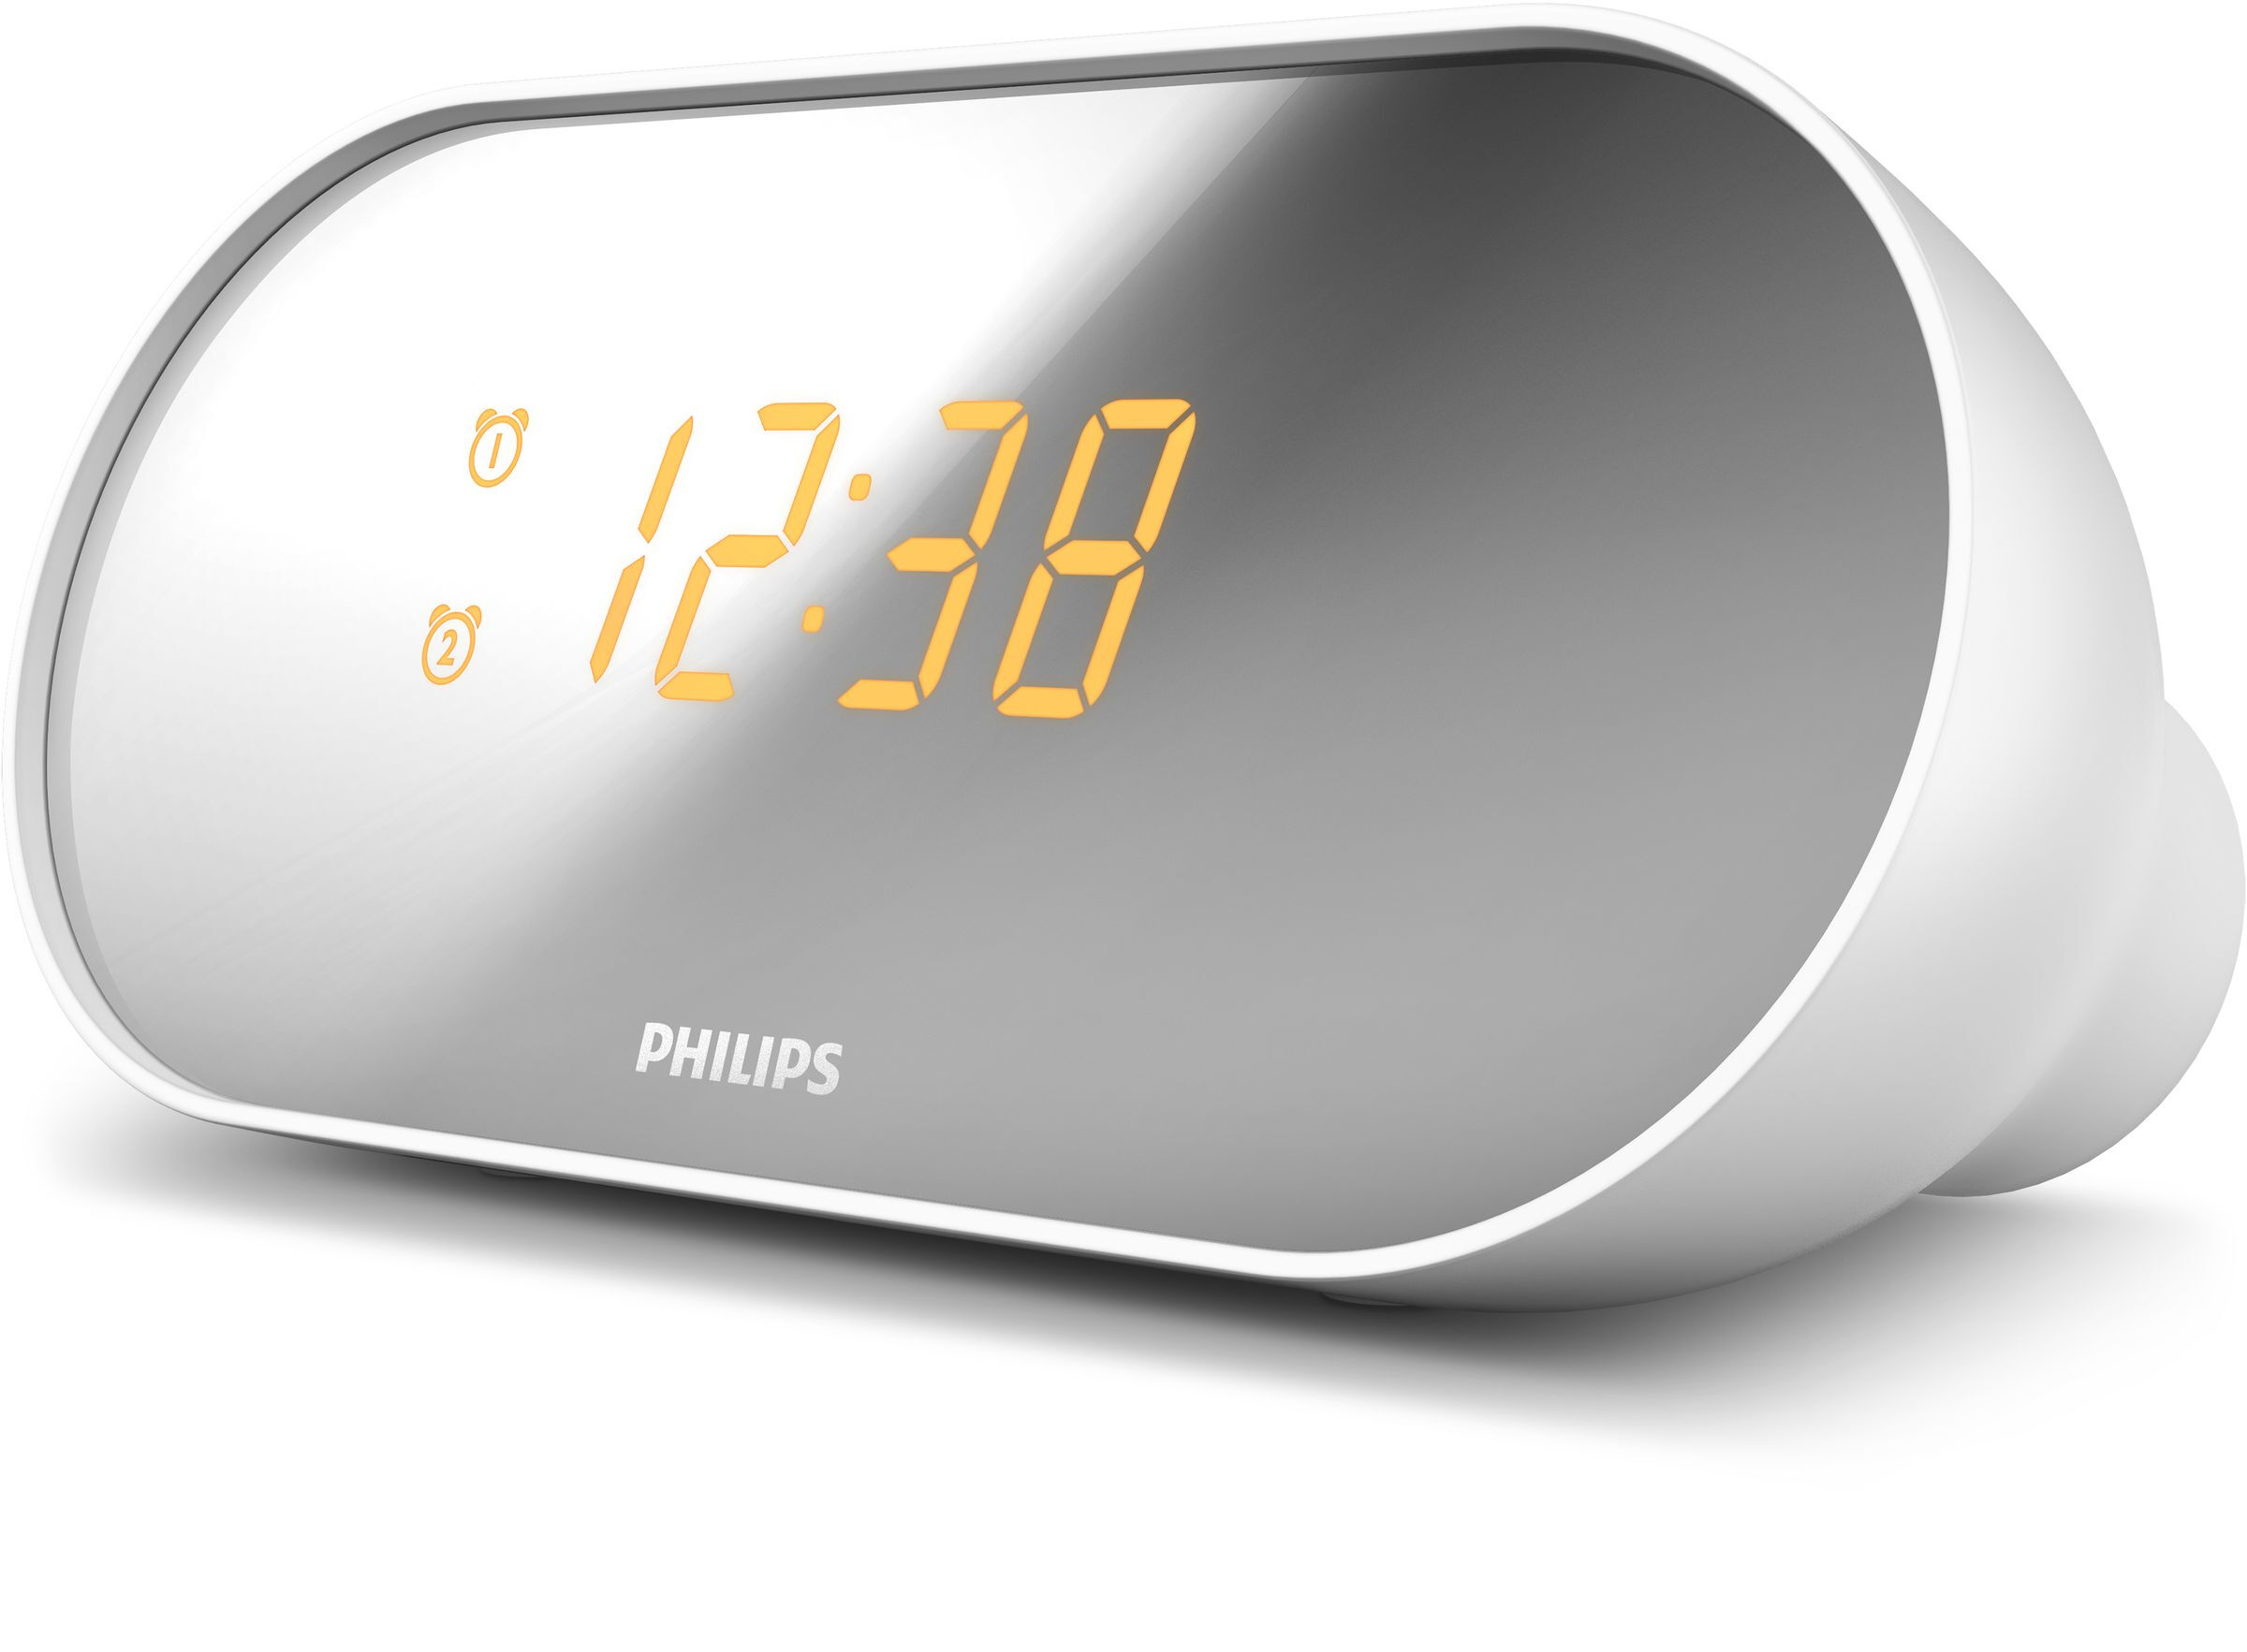 Philips AJ2000/12 Clock Radio